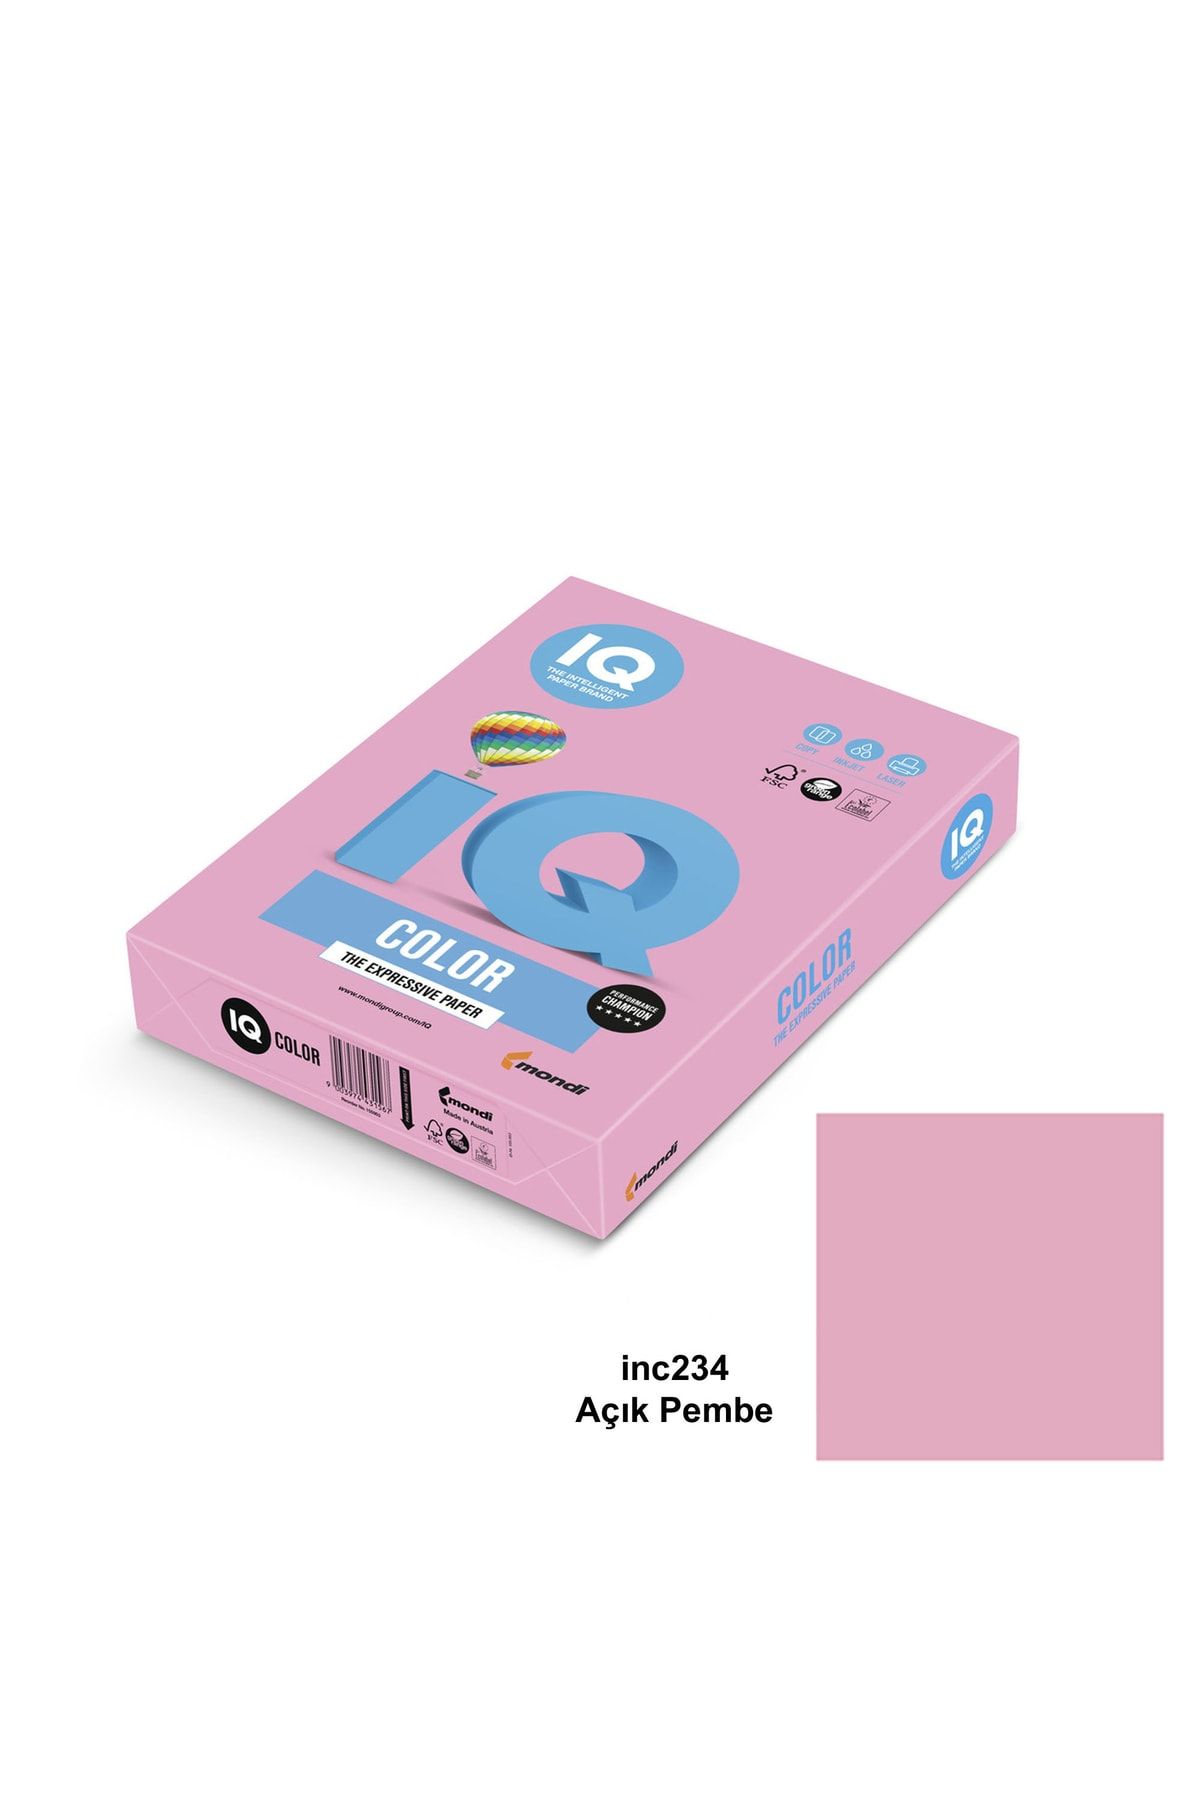 Mondi Iq Color A4 Renkli Fotokopi Kağıdı 80 gr Açık Pembe 1 Koli 5 Paket